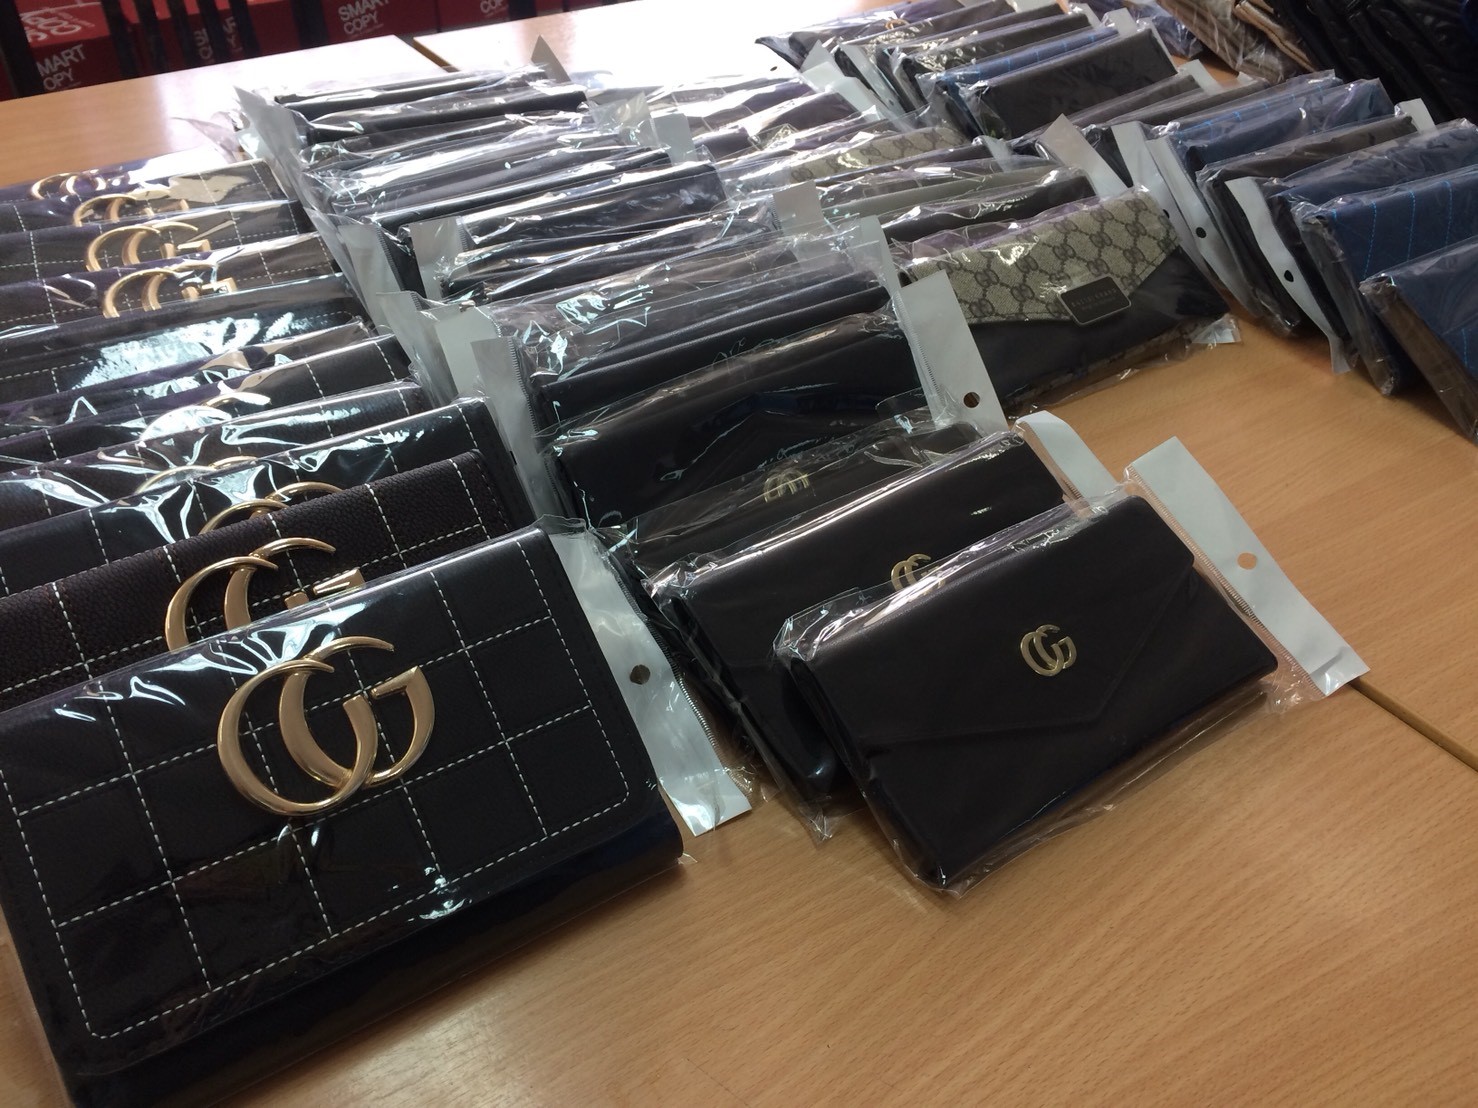 Operation on 9th October 2017 71 Counterfeit Goods Seized in Bangkok Metropolitan Area